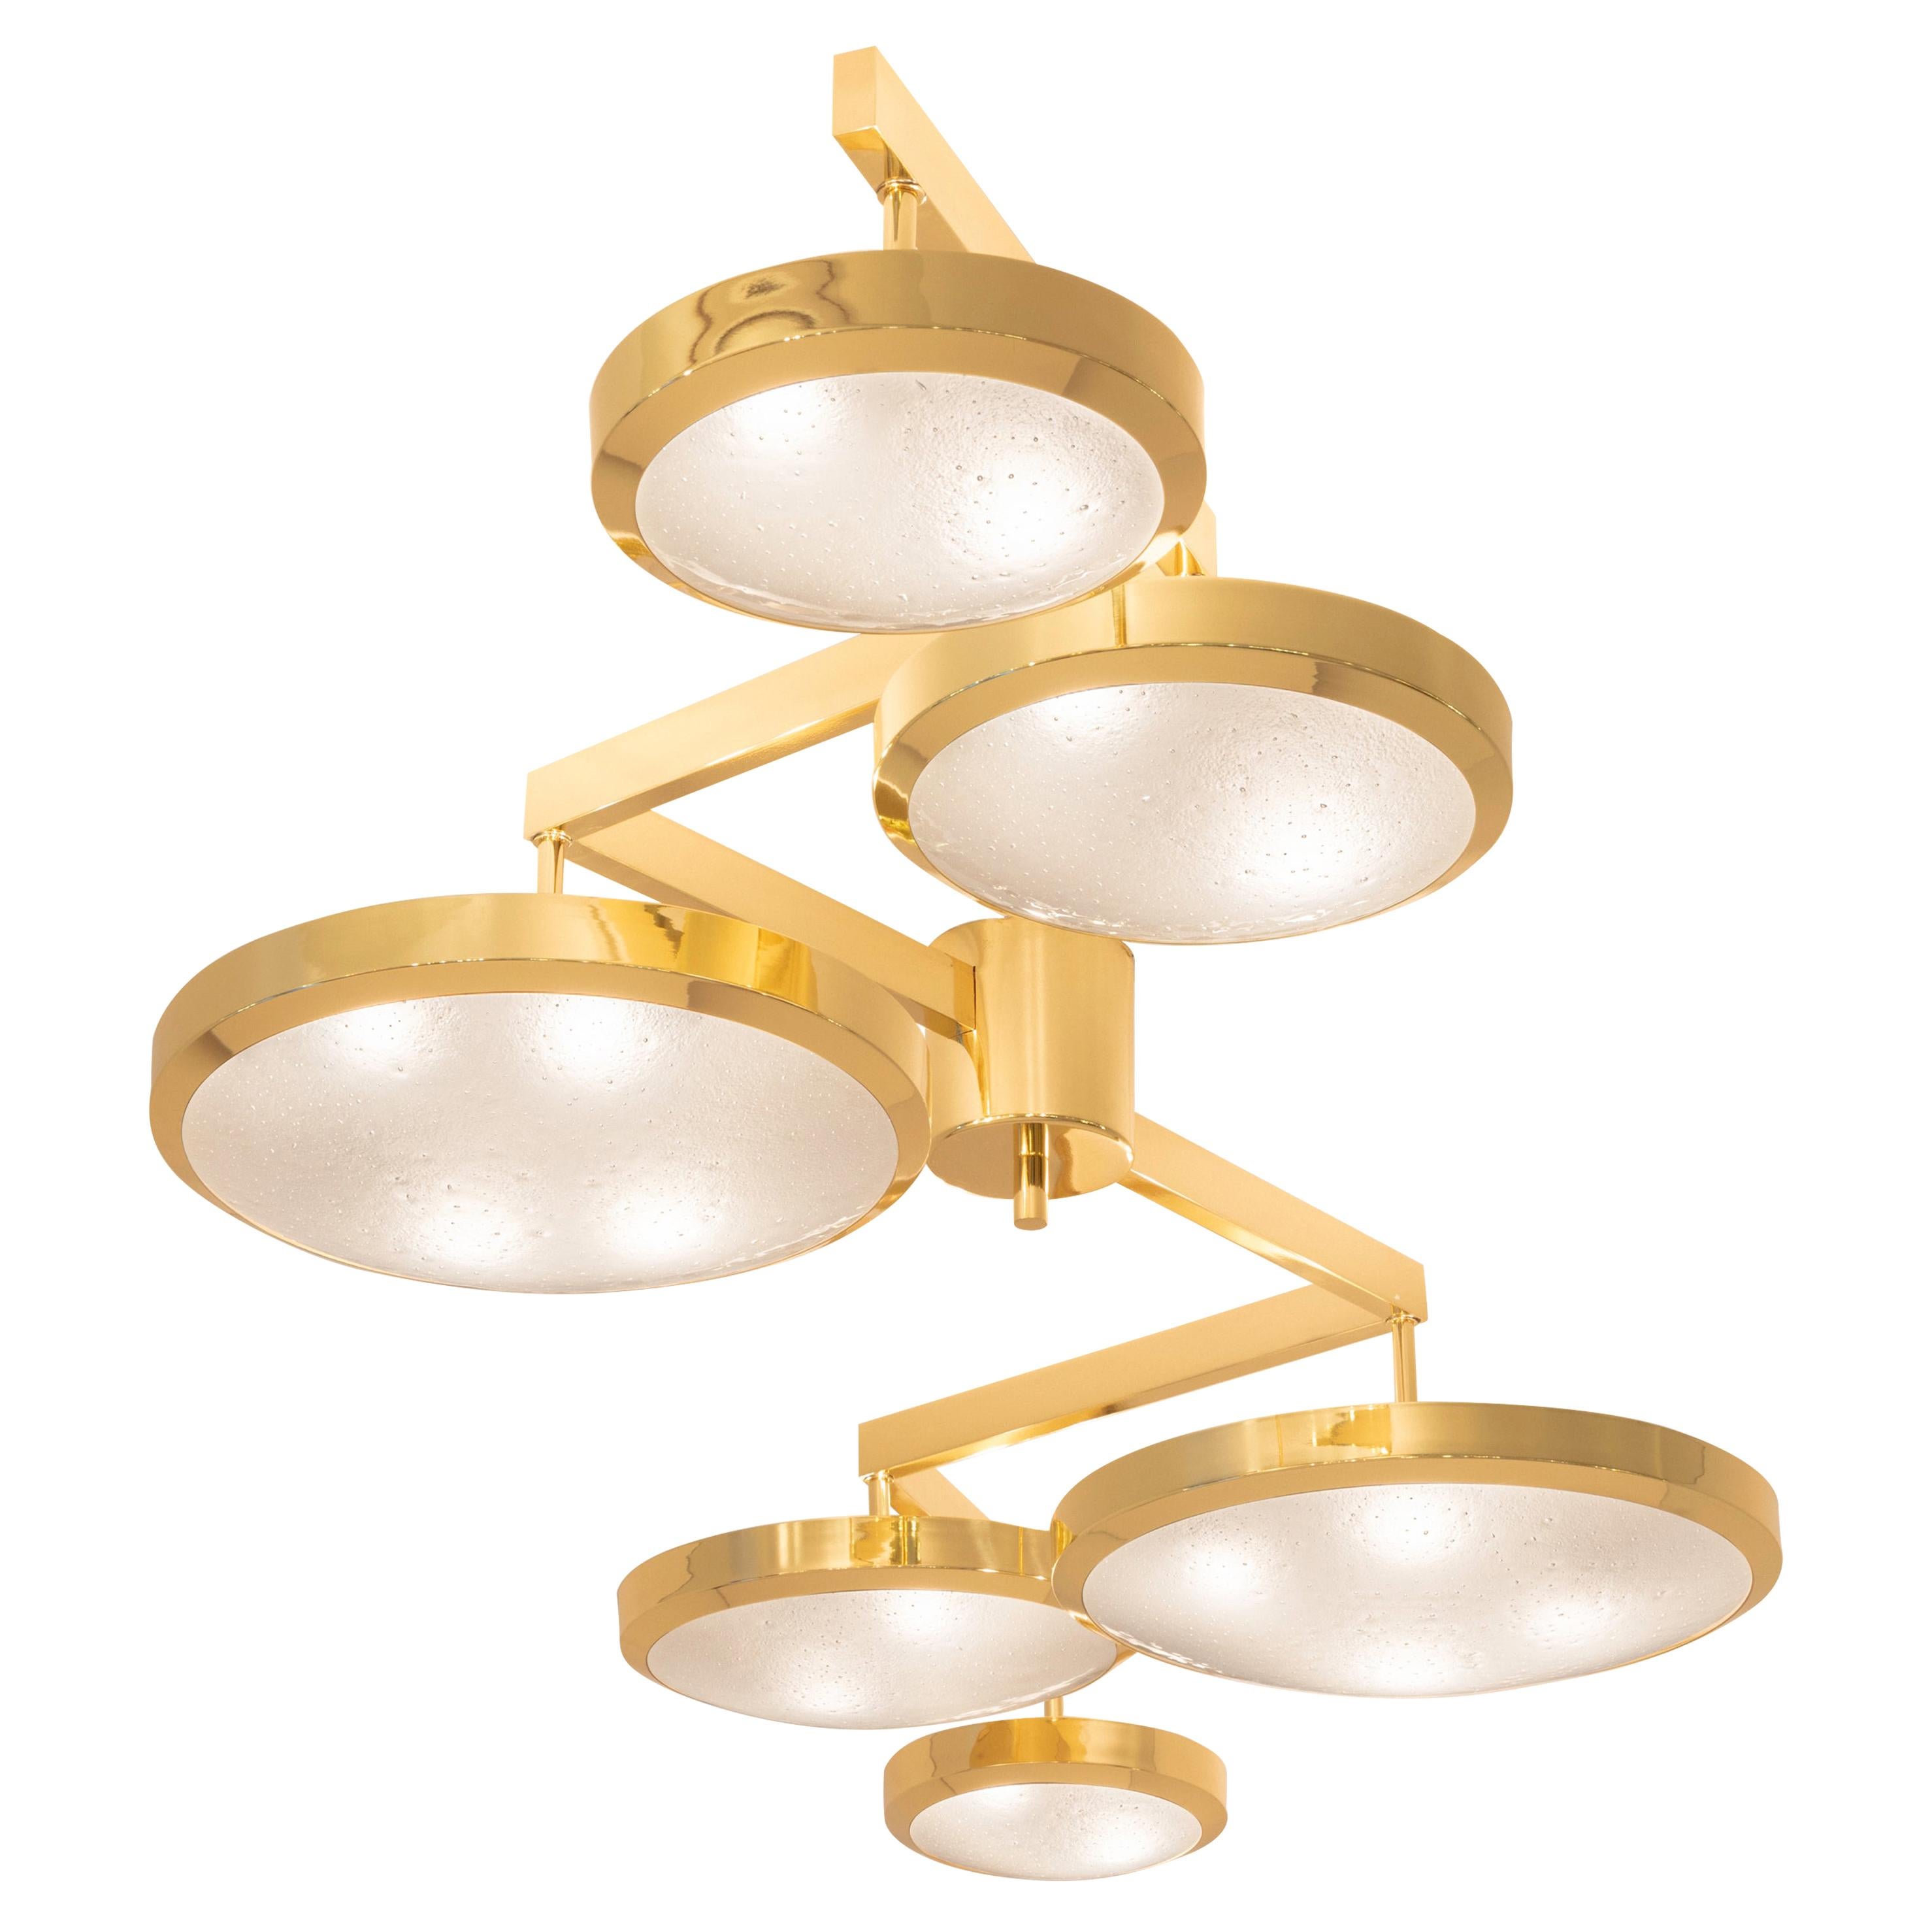 Geometria Sospesa Ceiling Light by Gaspare Asaro - Polished Brass For Sale